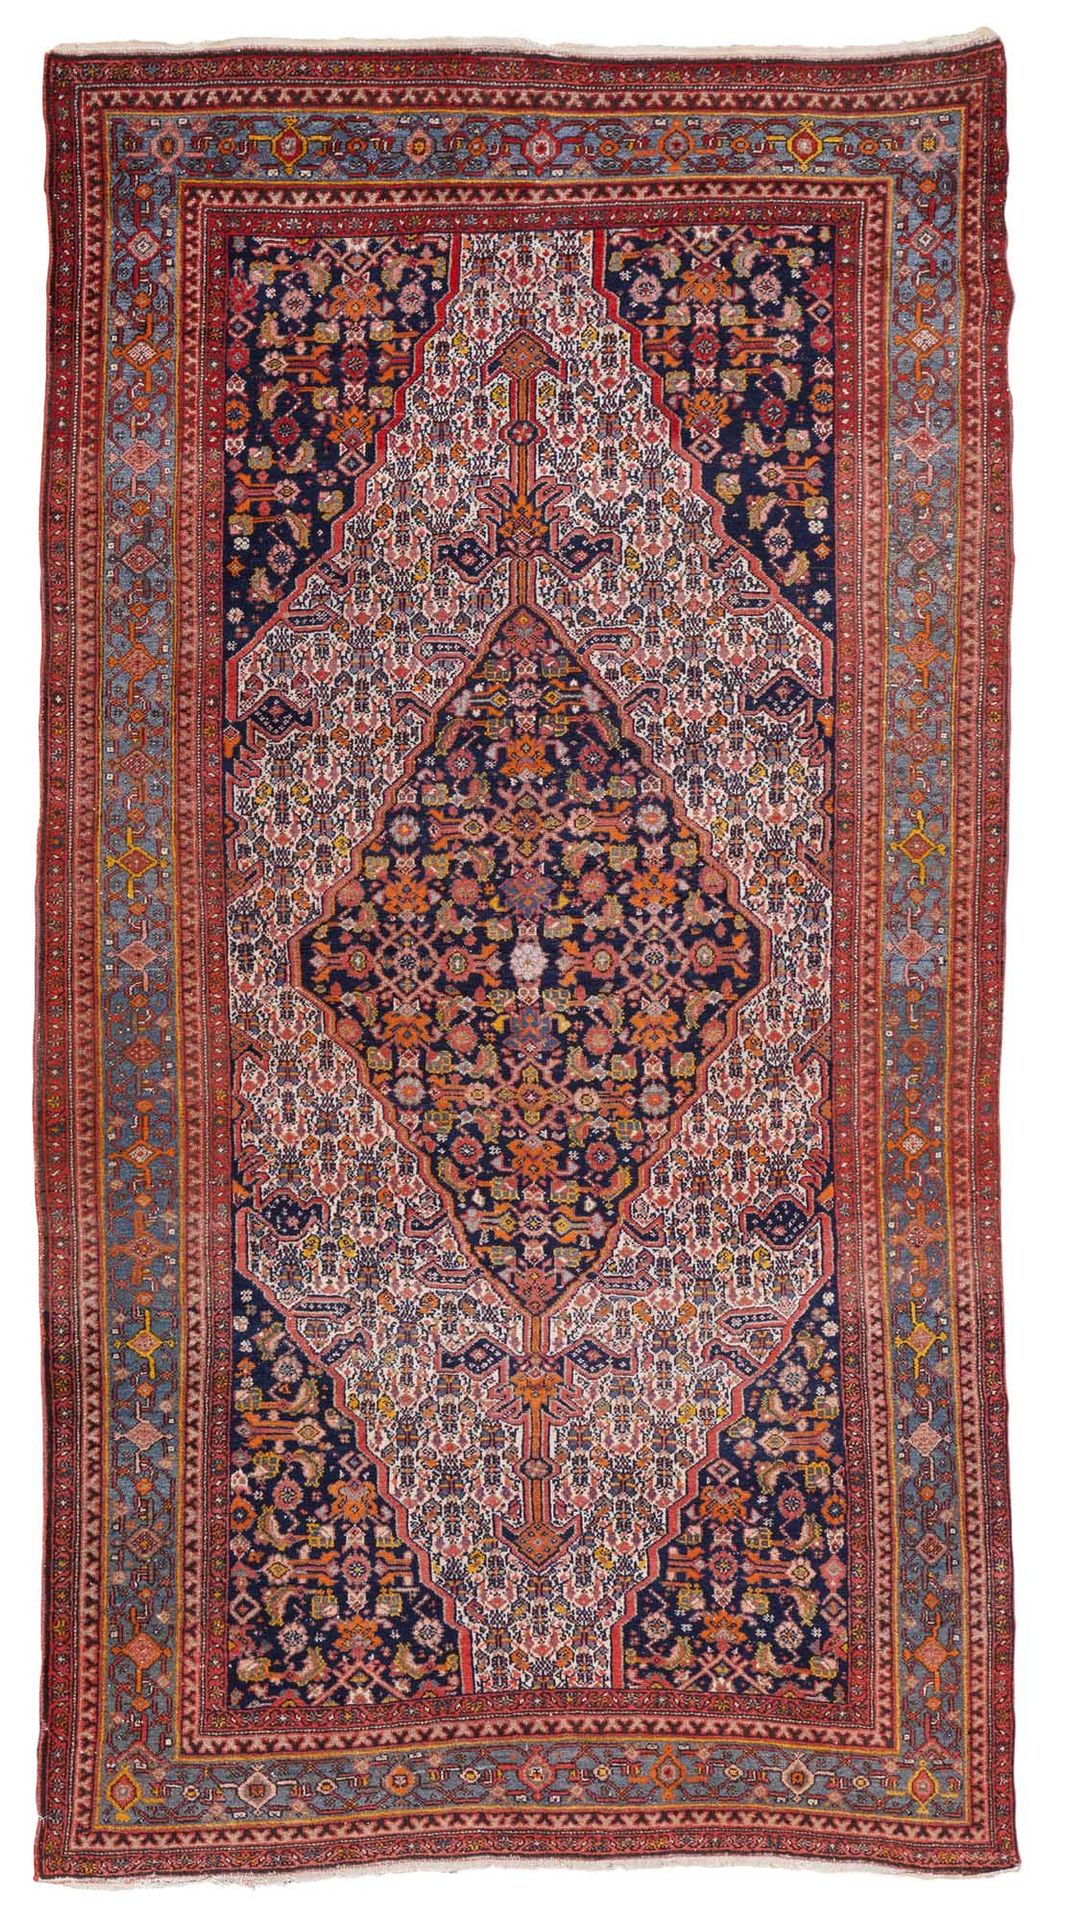 Null MELAYER carpet (Persia), late 19th century

Dimensions : 210 x 127cm

Techn&hellip;